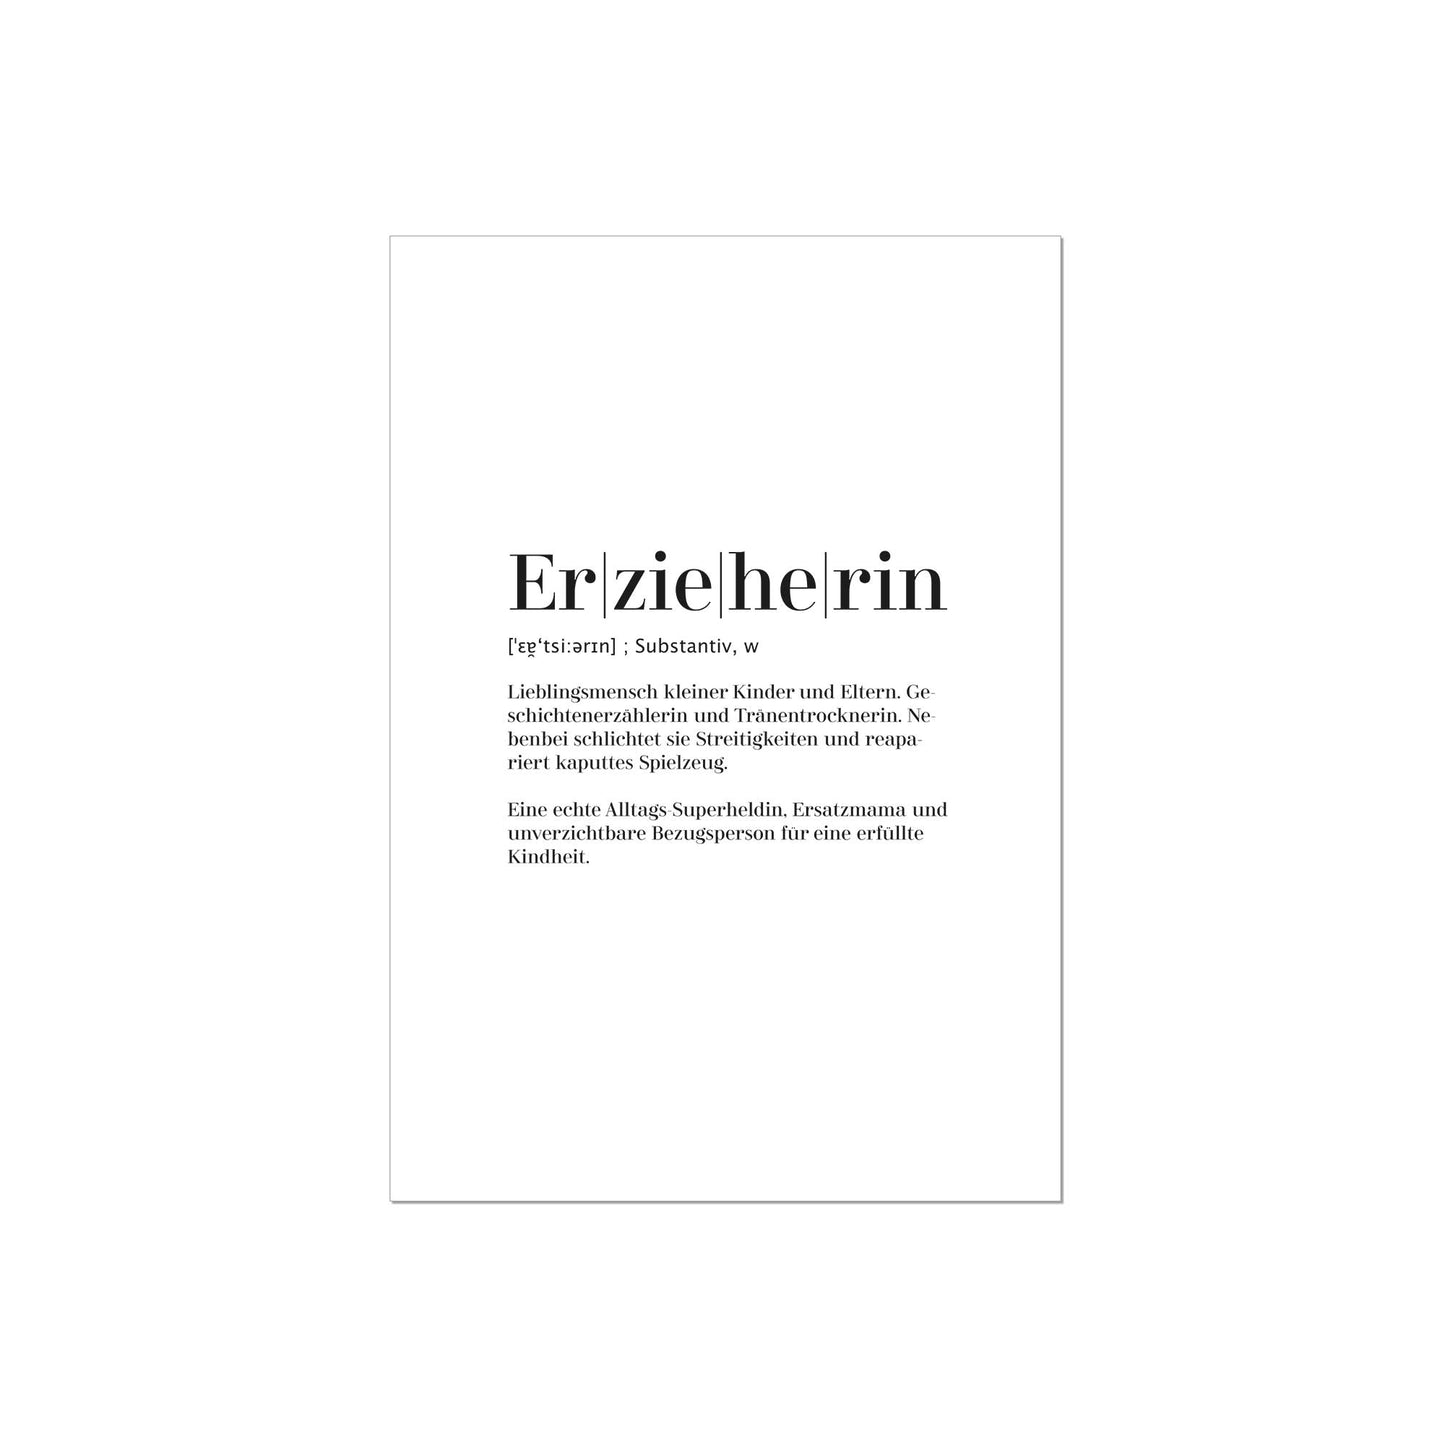 Art Print | Erzierherin - Worterklärung Definition à la Duden